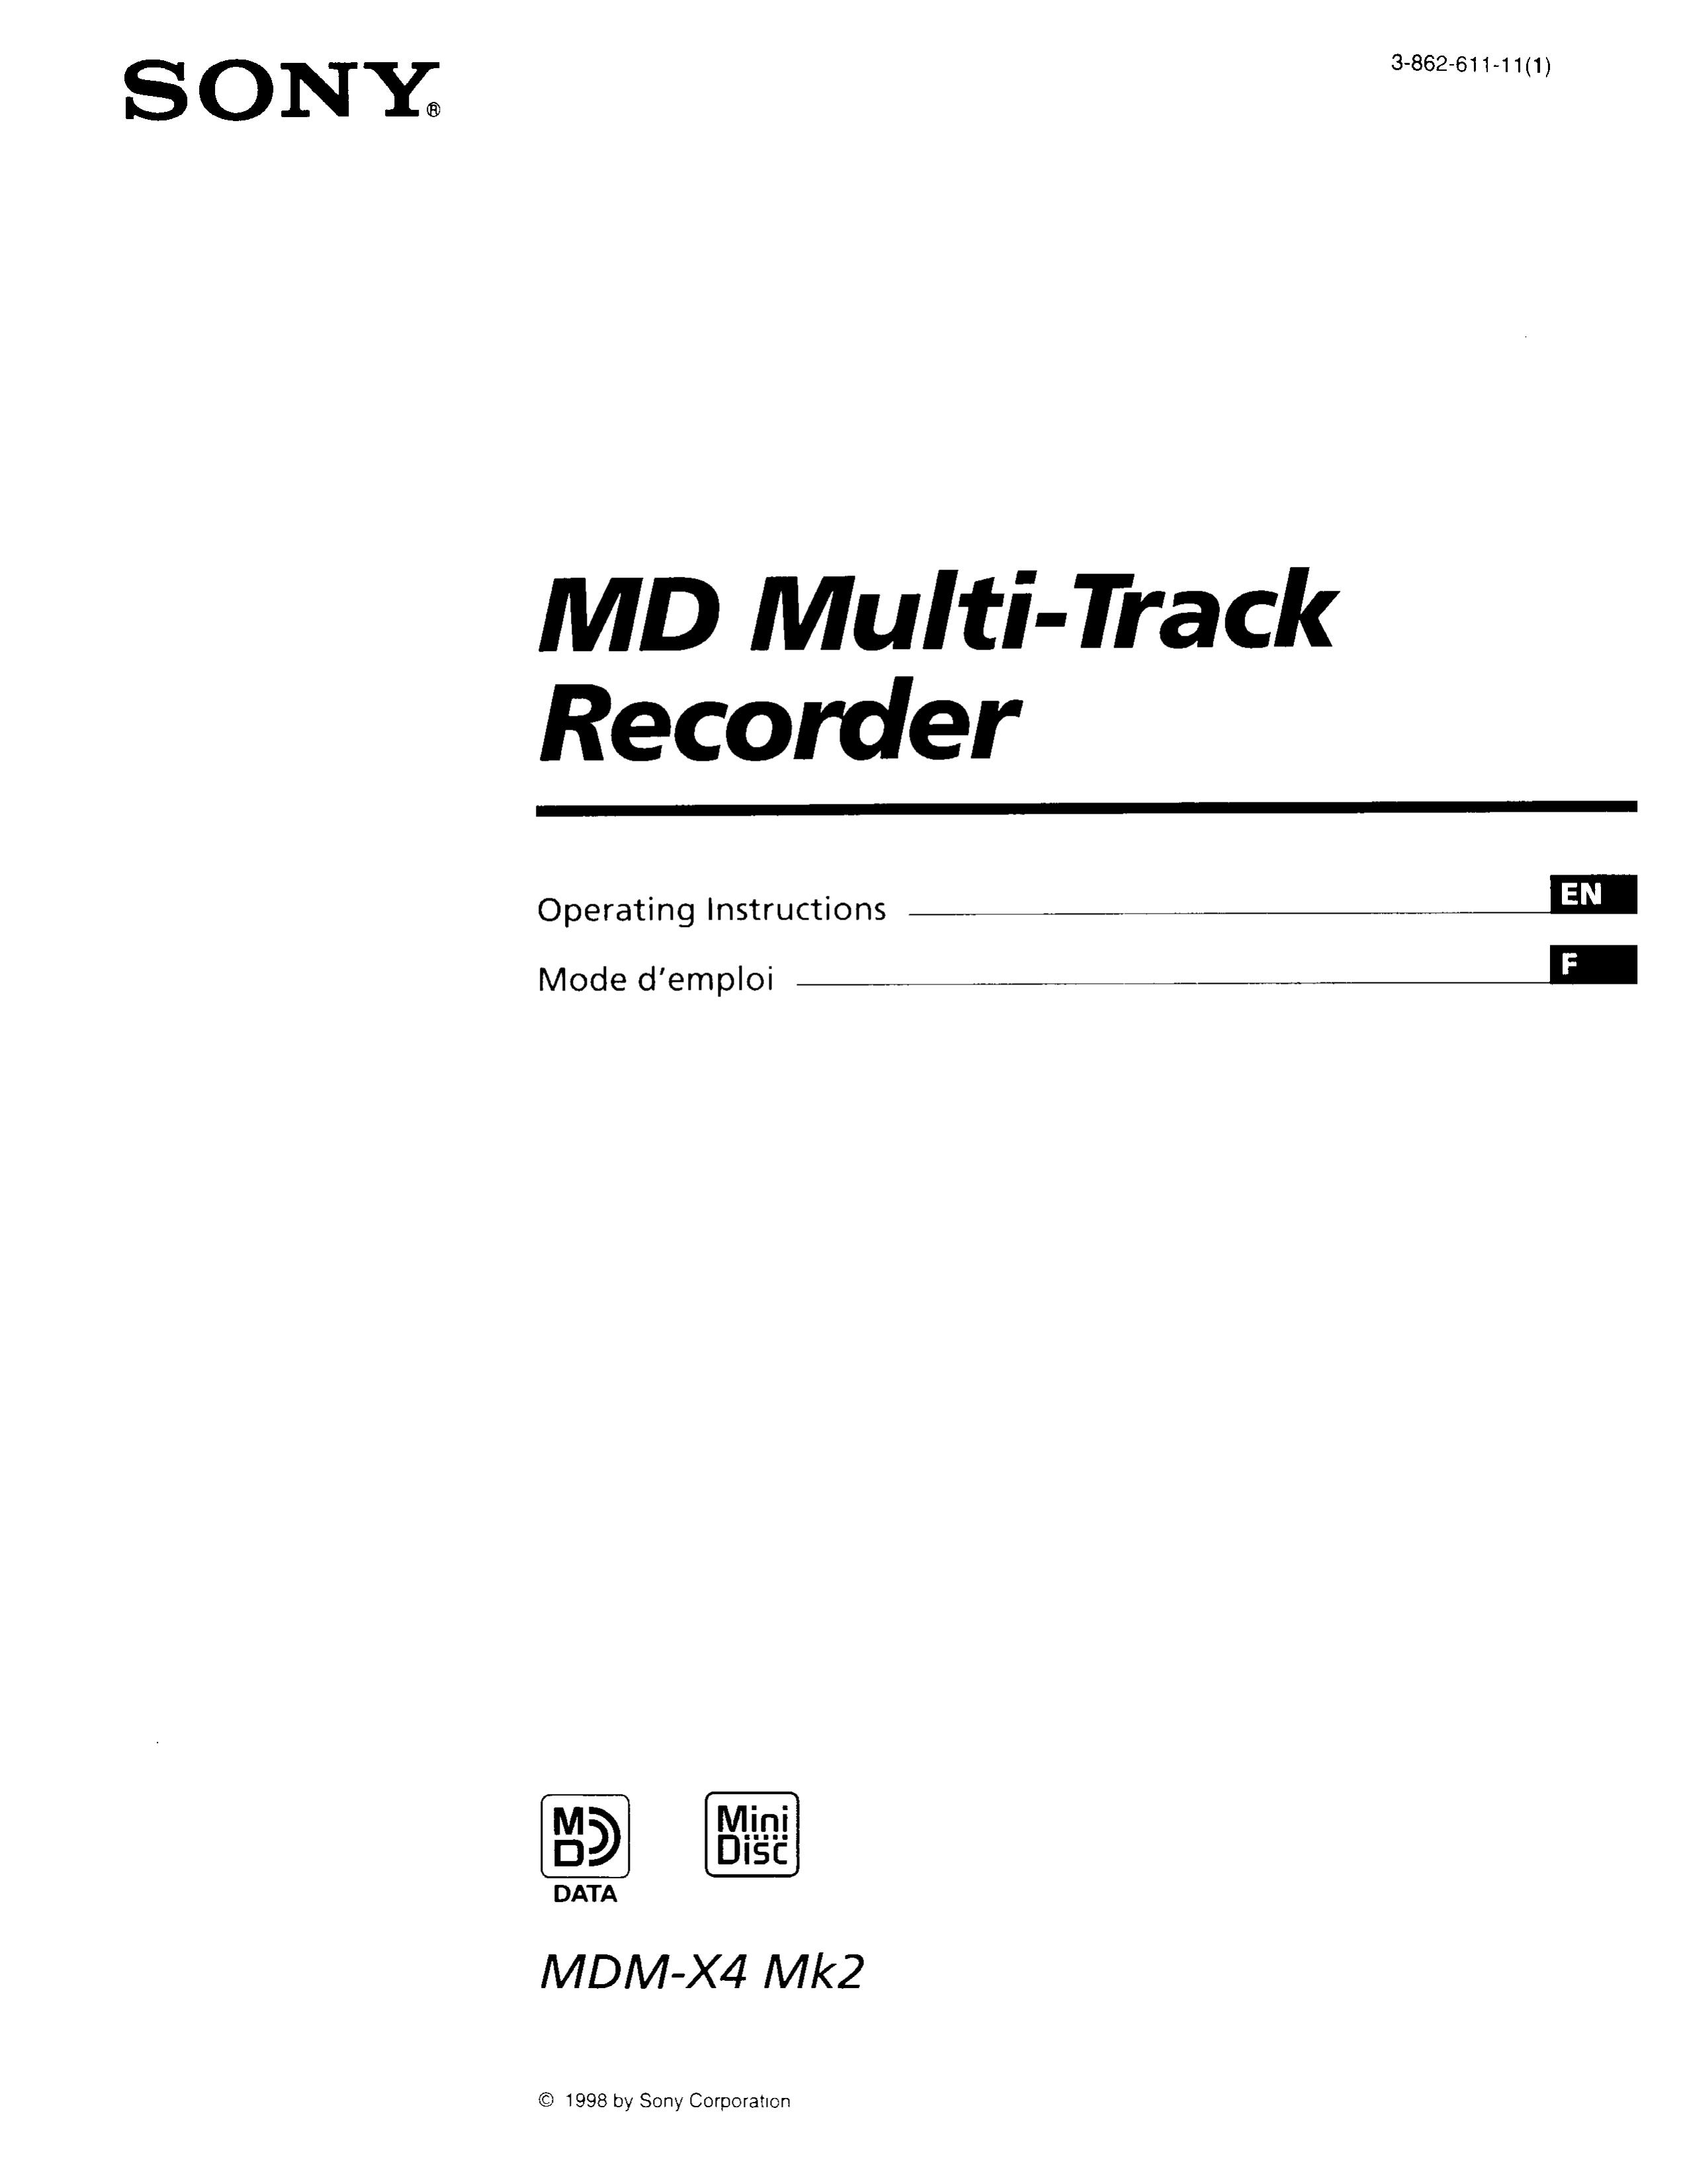 Sony mdm-x4 mk2 Recording Equipment User Manual